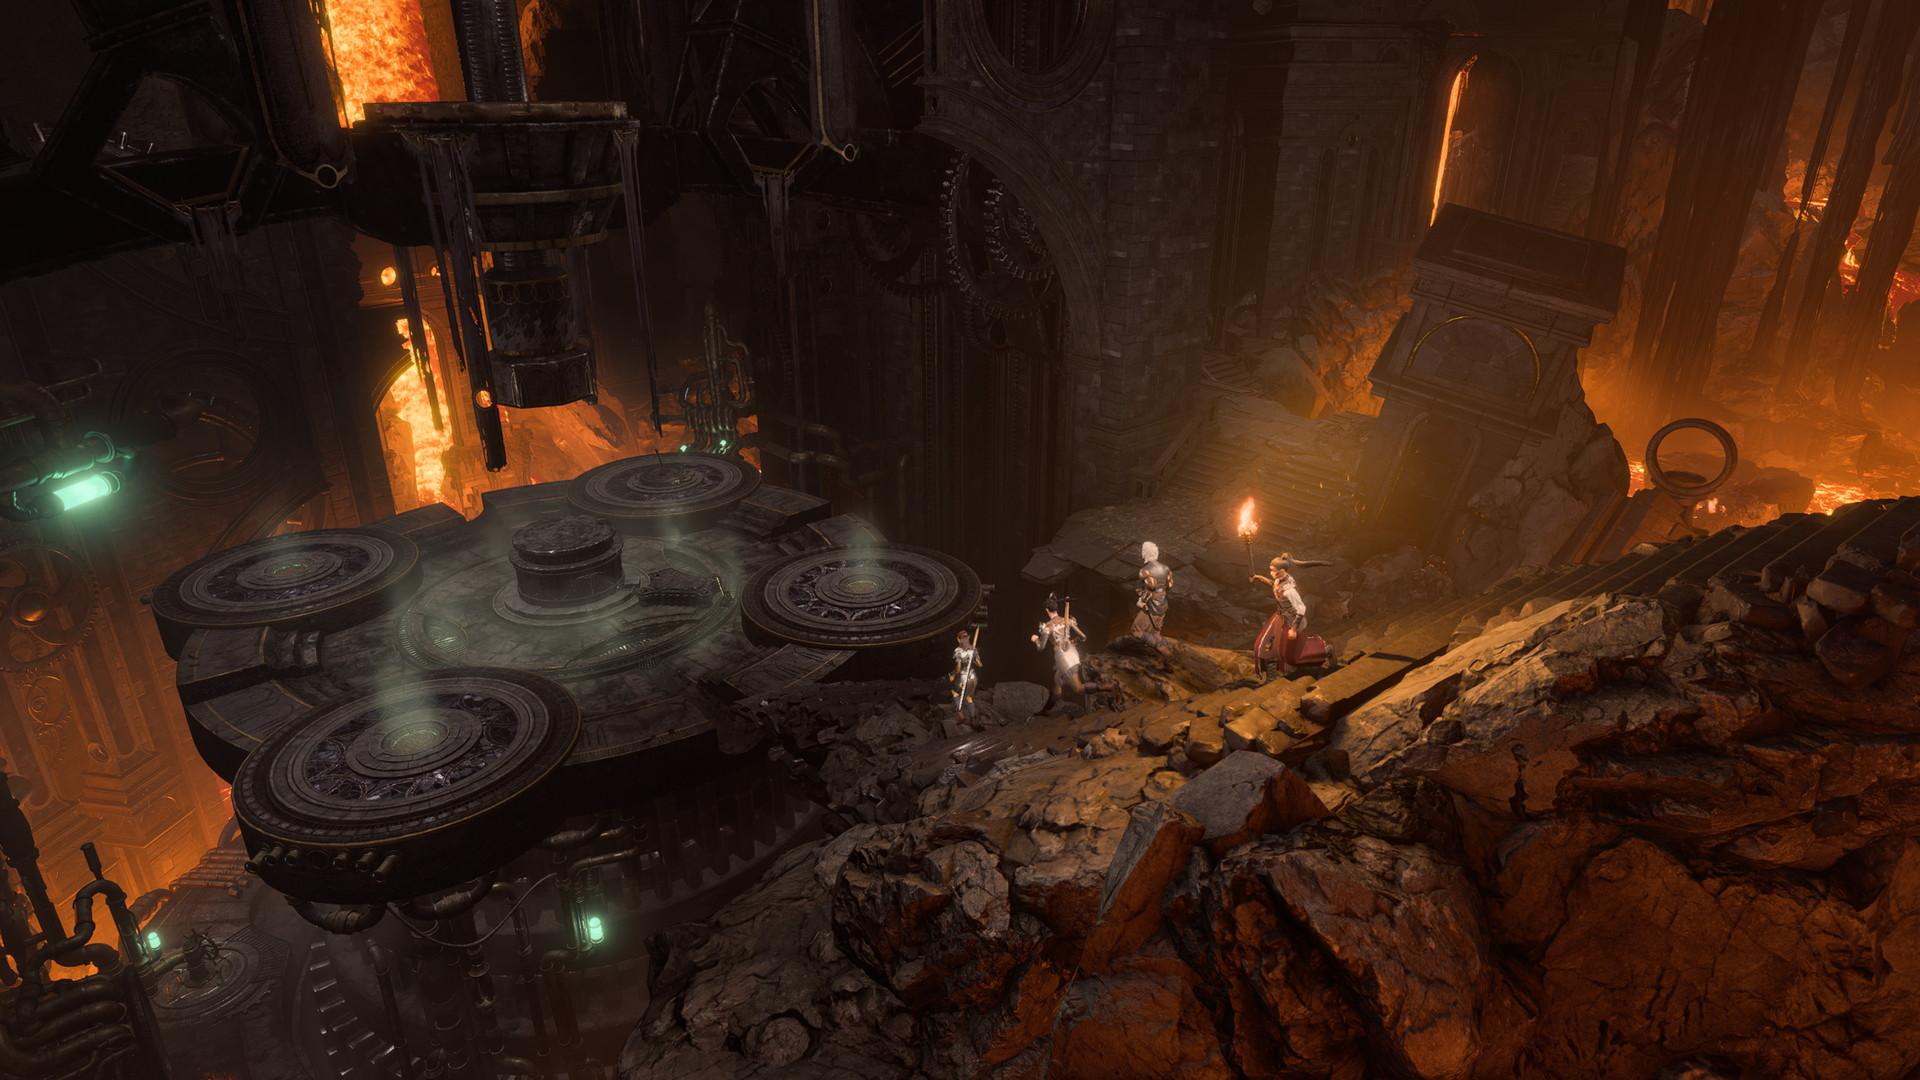 Screenshot №15 from game Baldur's Gate 3